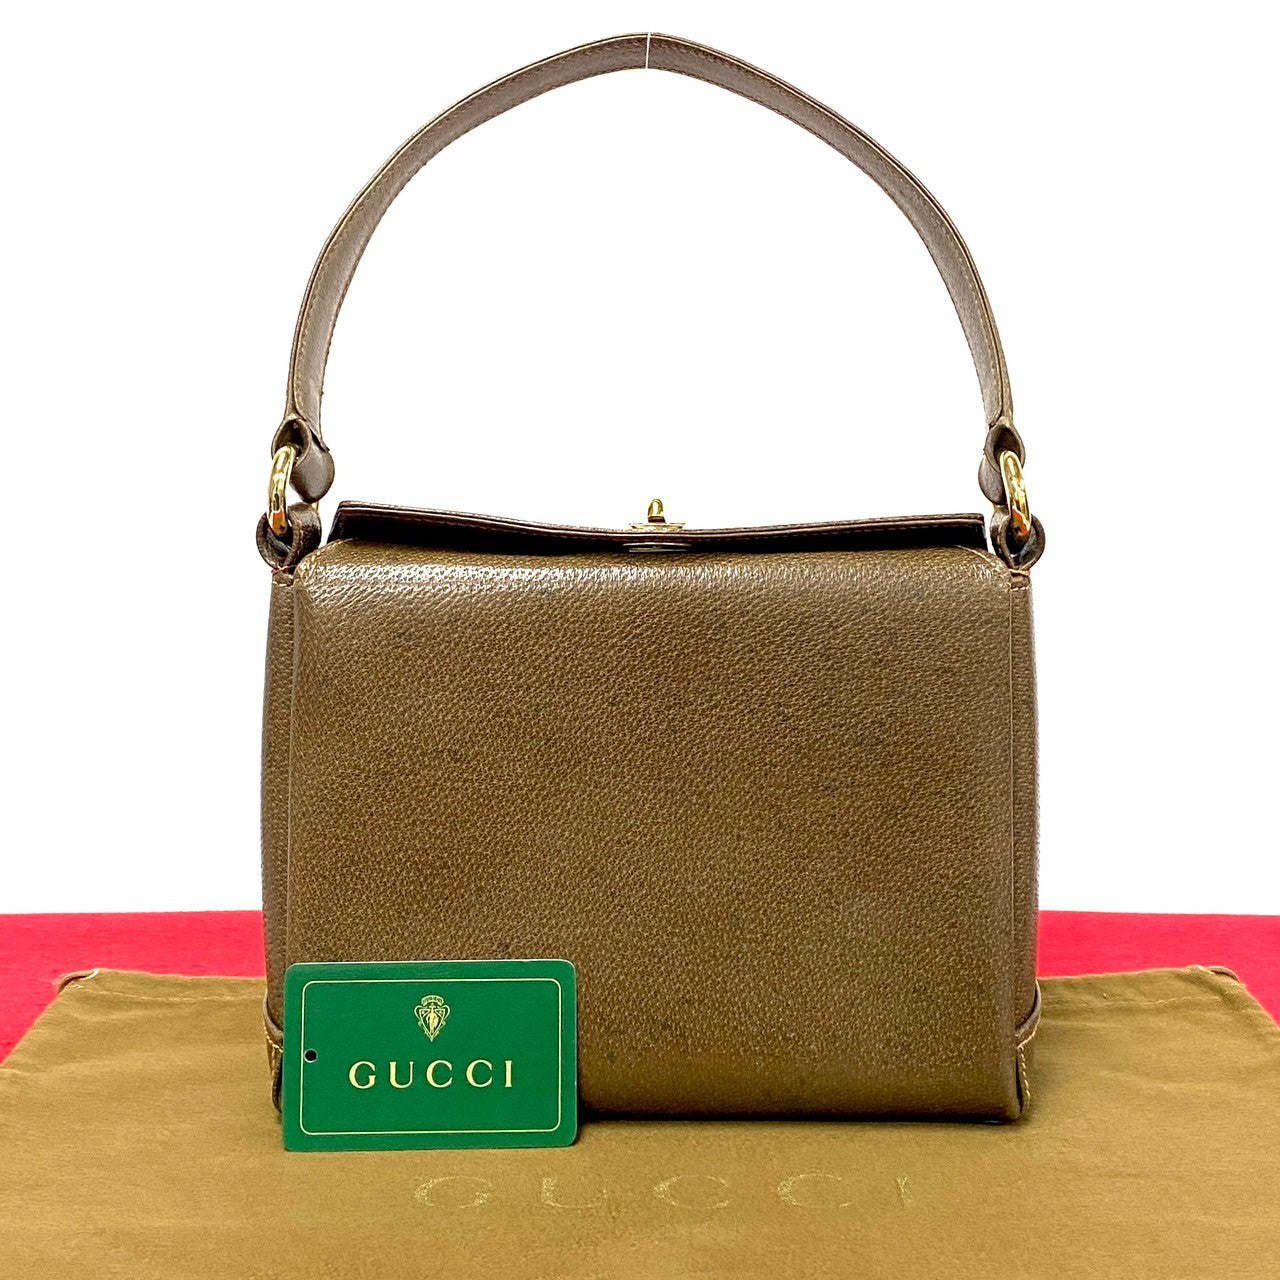 Gucci Leather Handbag Leather Handbag in Good condition